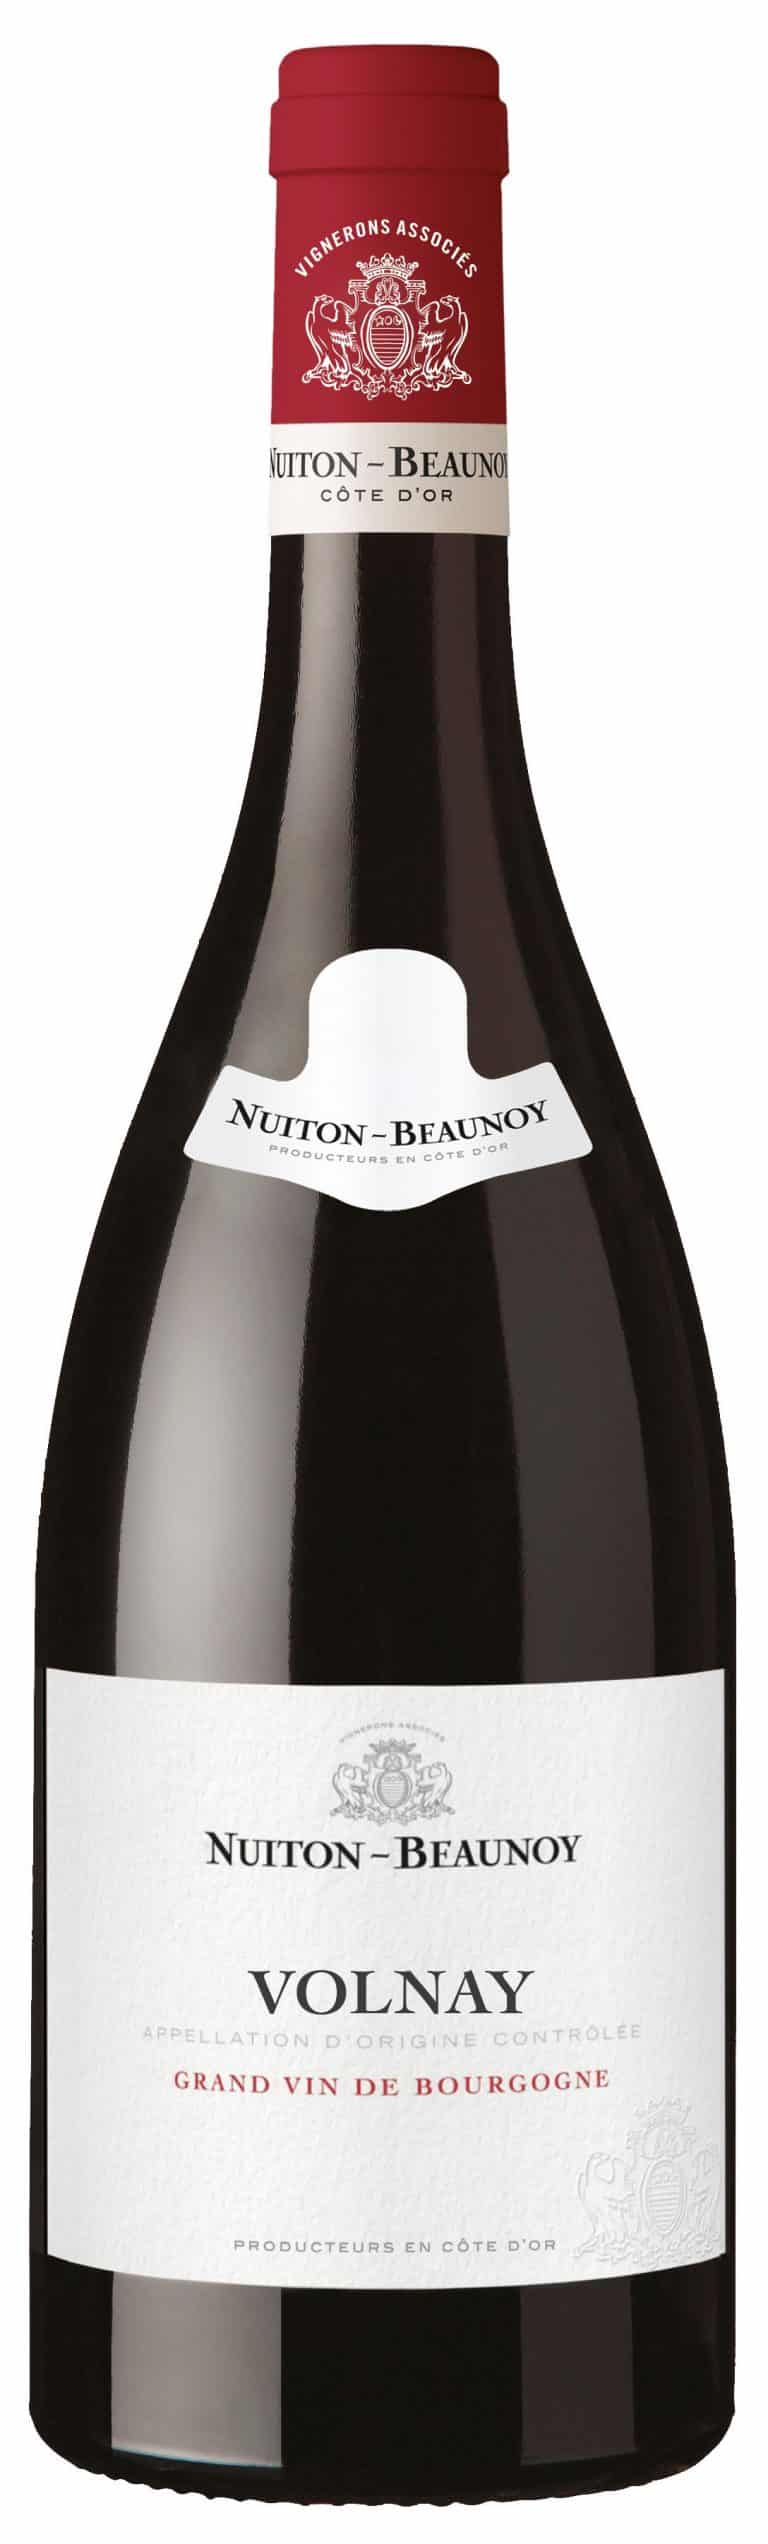 NBPNVO NV Bottle Shot